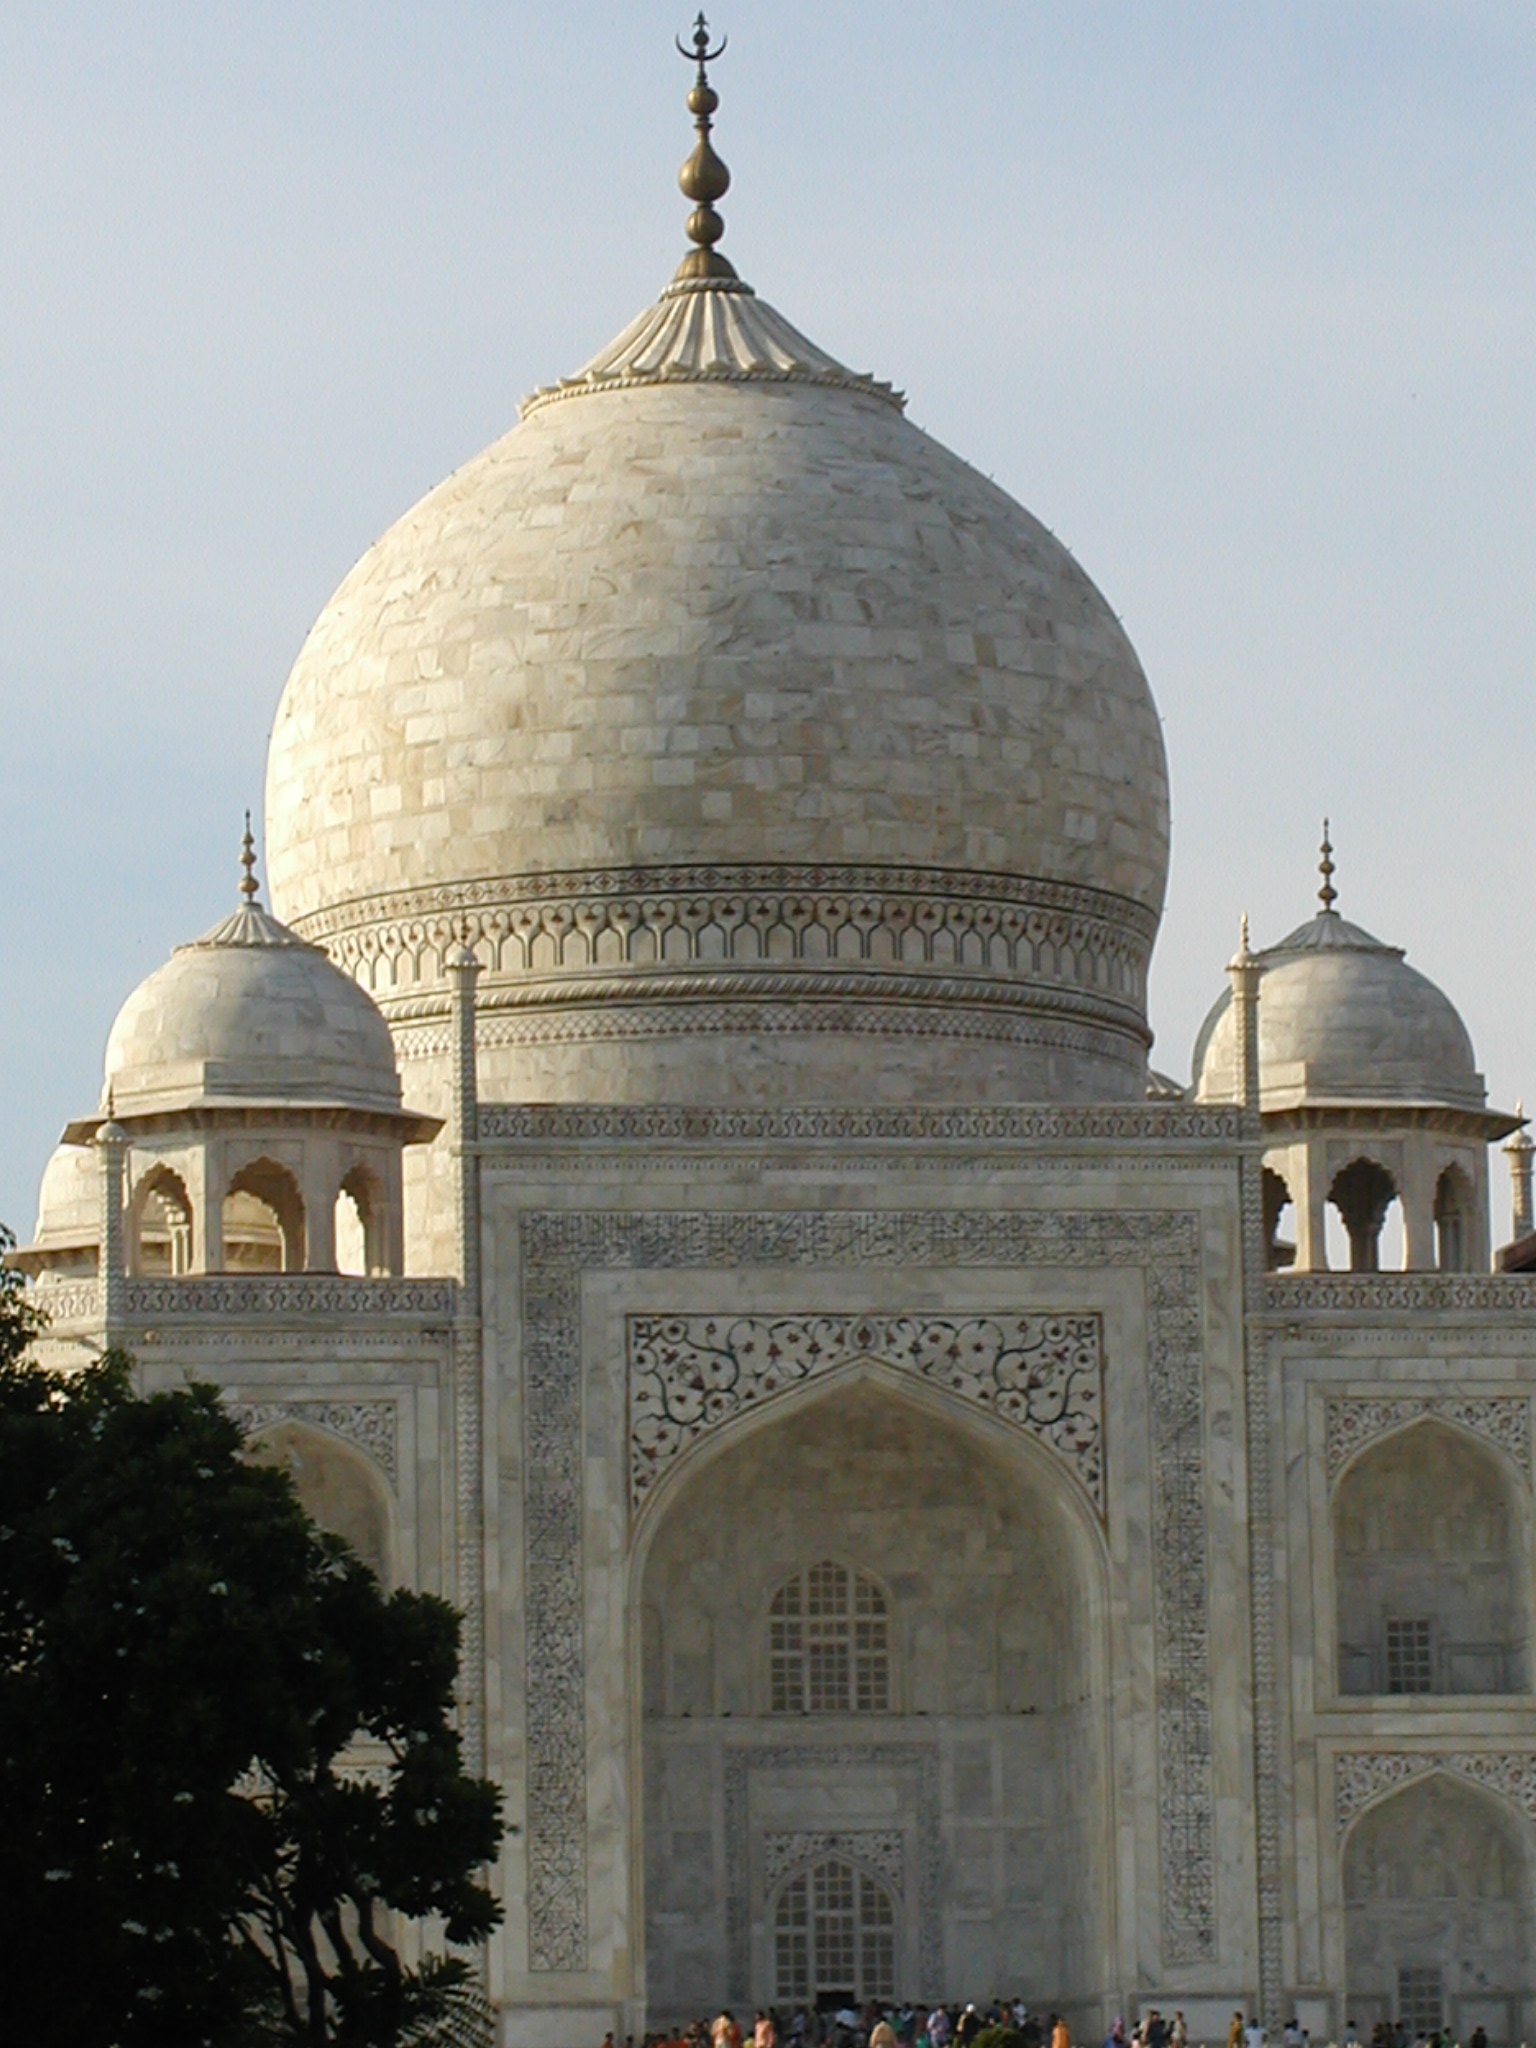 The top dome of the Taj Mahal 